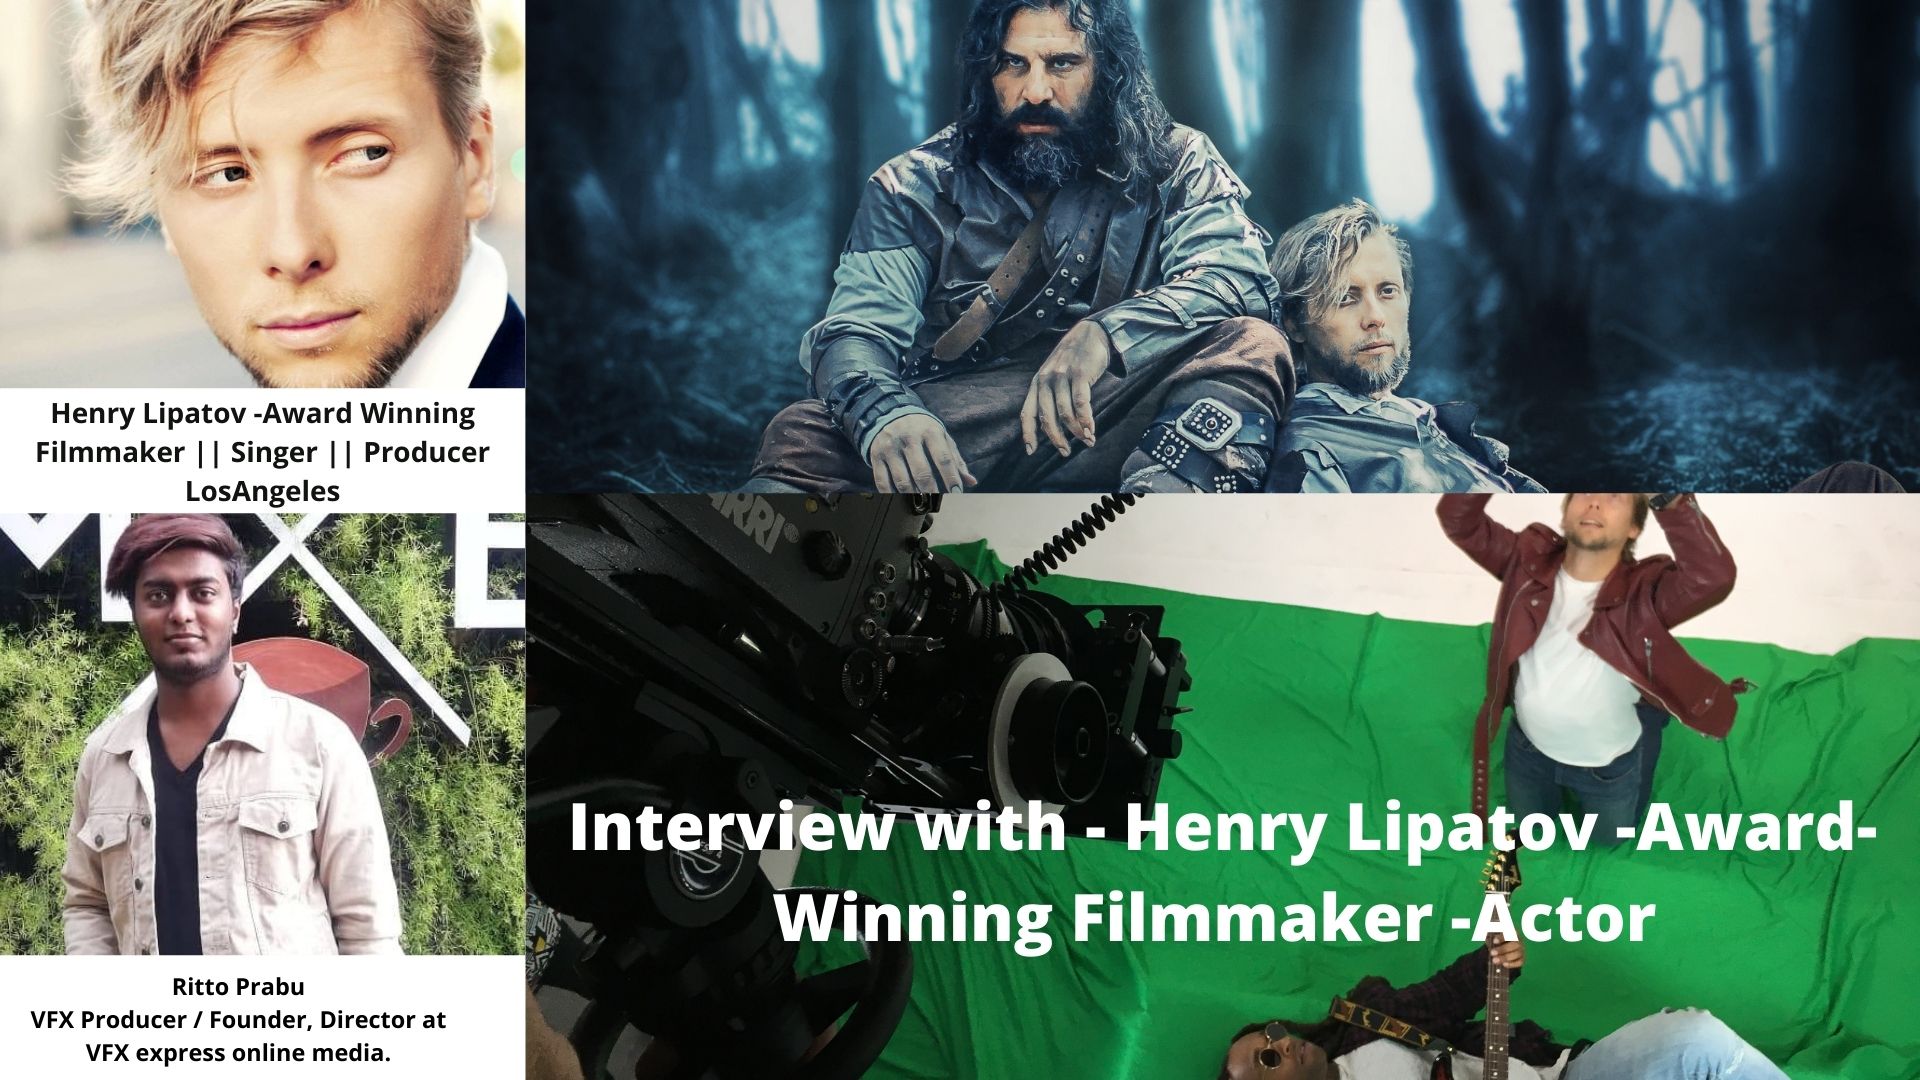 Interview with – Henry Lipatov -Award-Winning Filmmaker -Actor